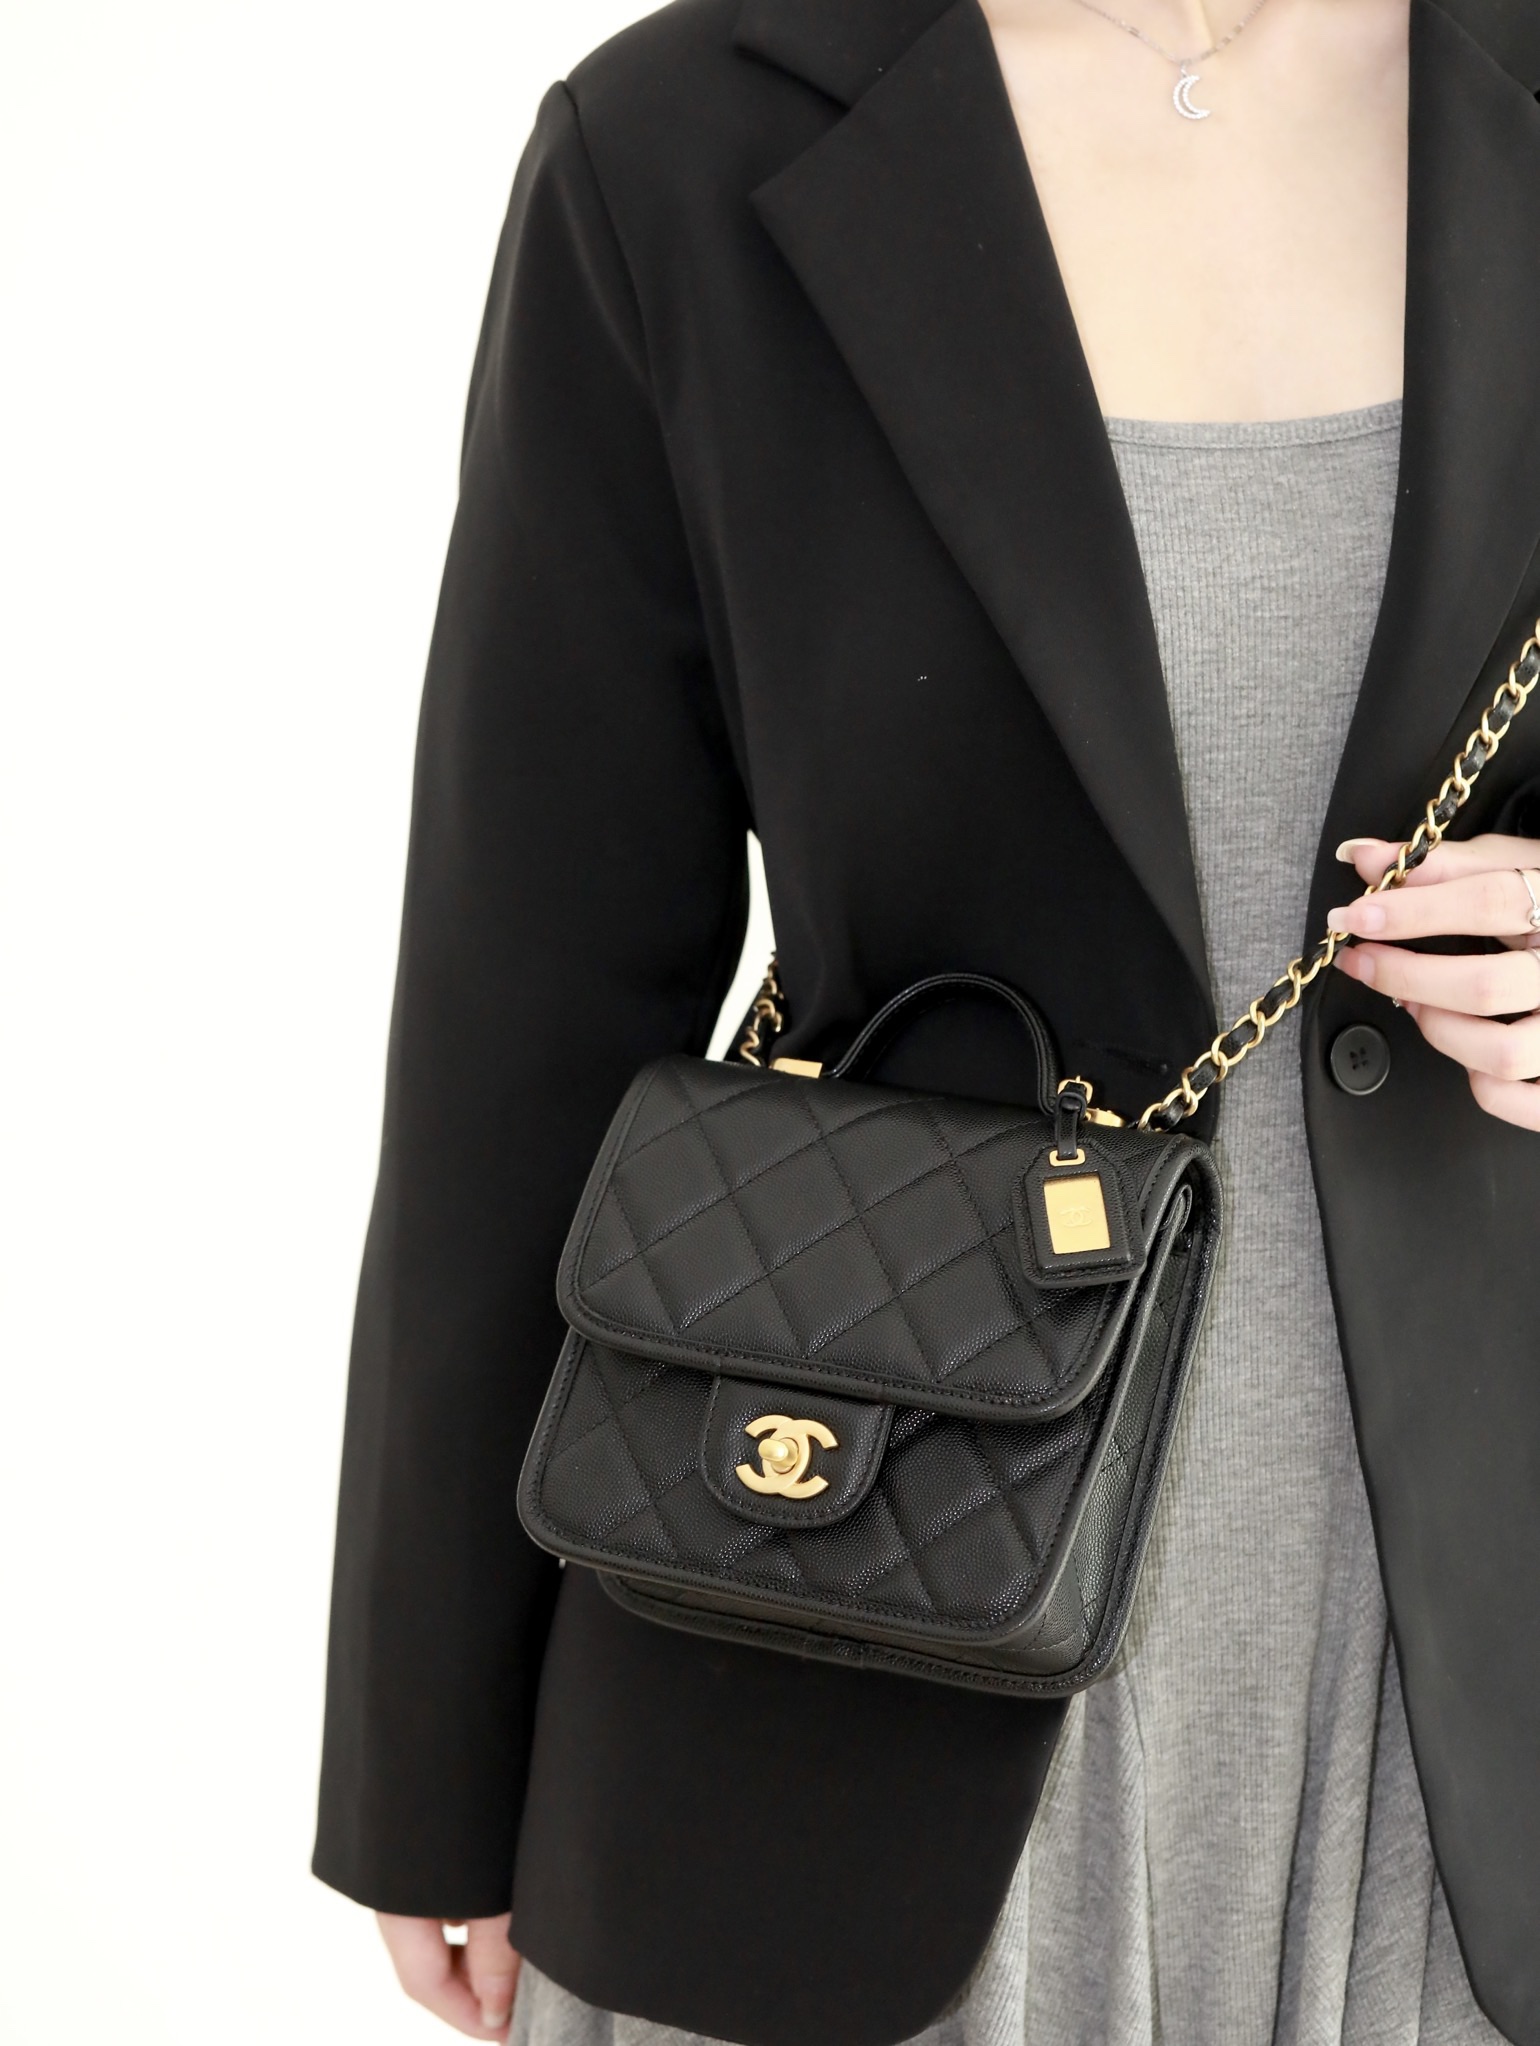 Chanel School Memory Square Top Handle Flap Bag Black Patent